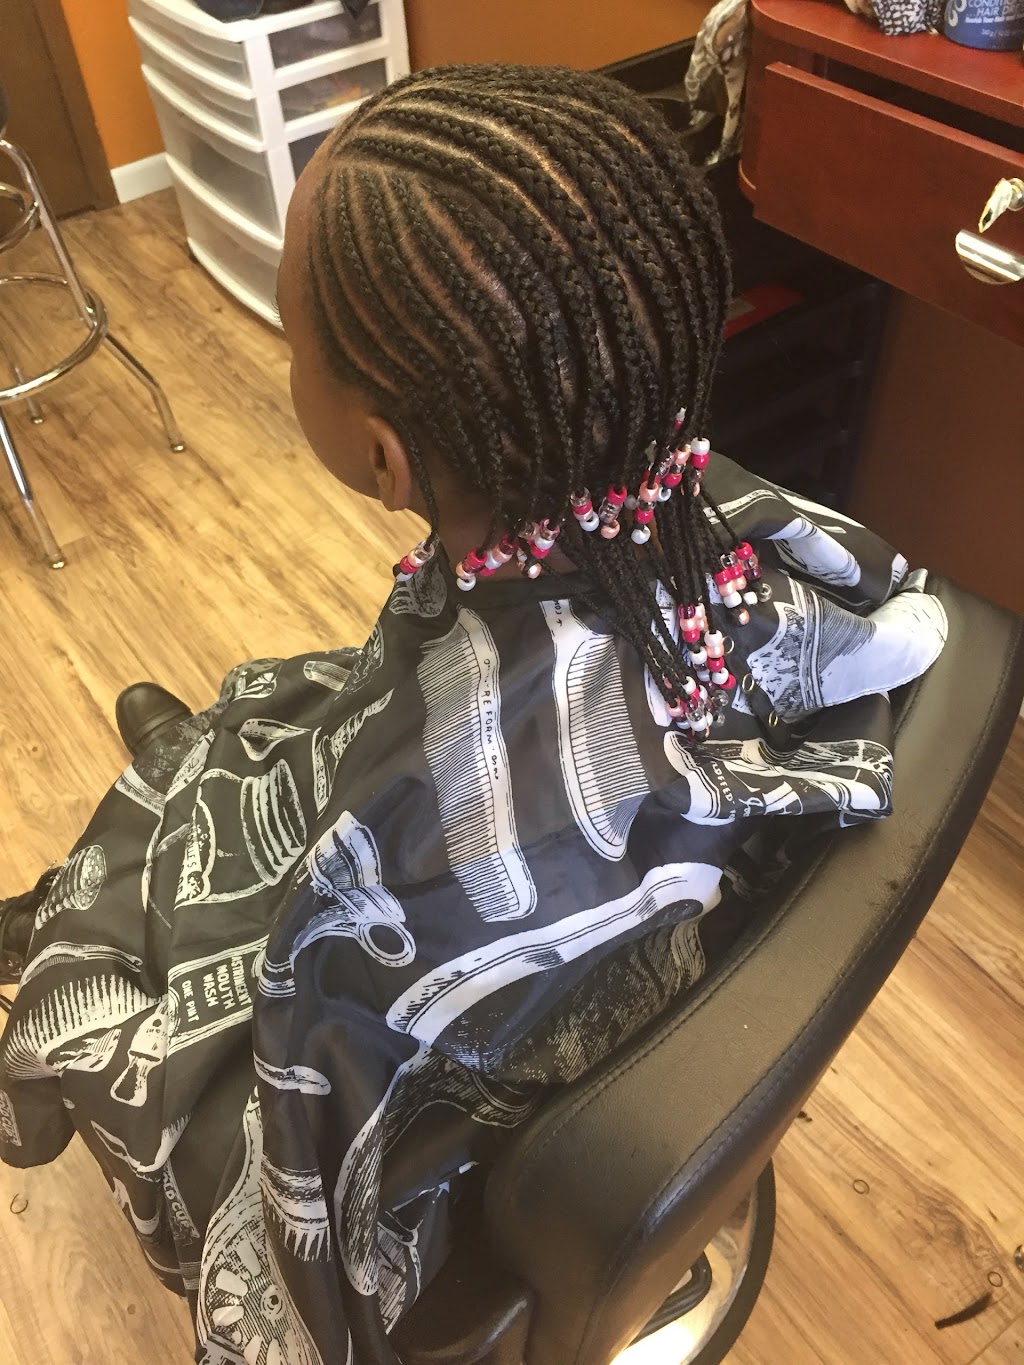 Awas Beautiful Hair Bar African Hairbraiding And Hair Styling | 6338 Rising Sun Ave, Philadelphia, PA 19111 | Phone: (215) 613-5681